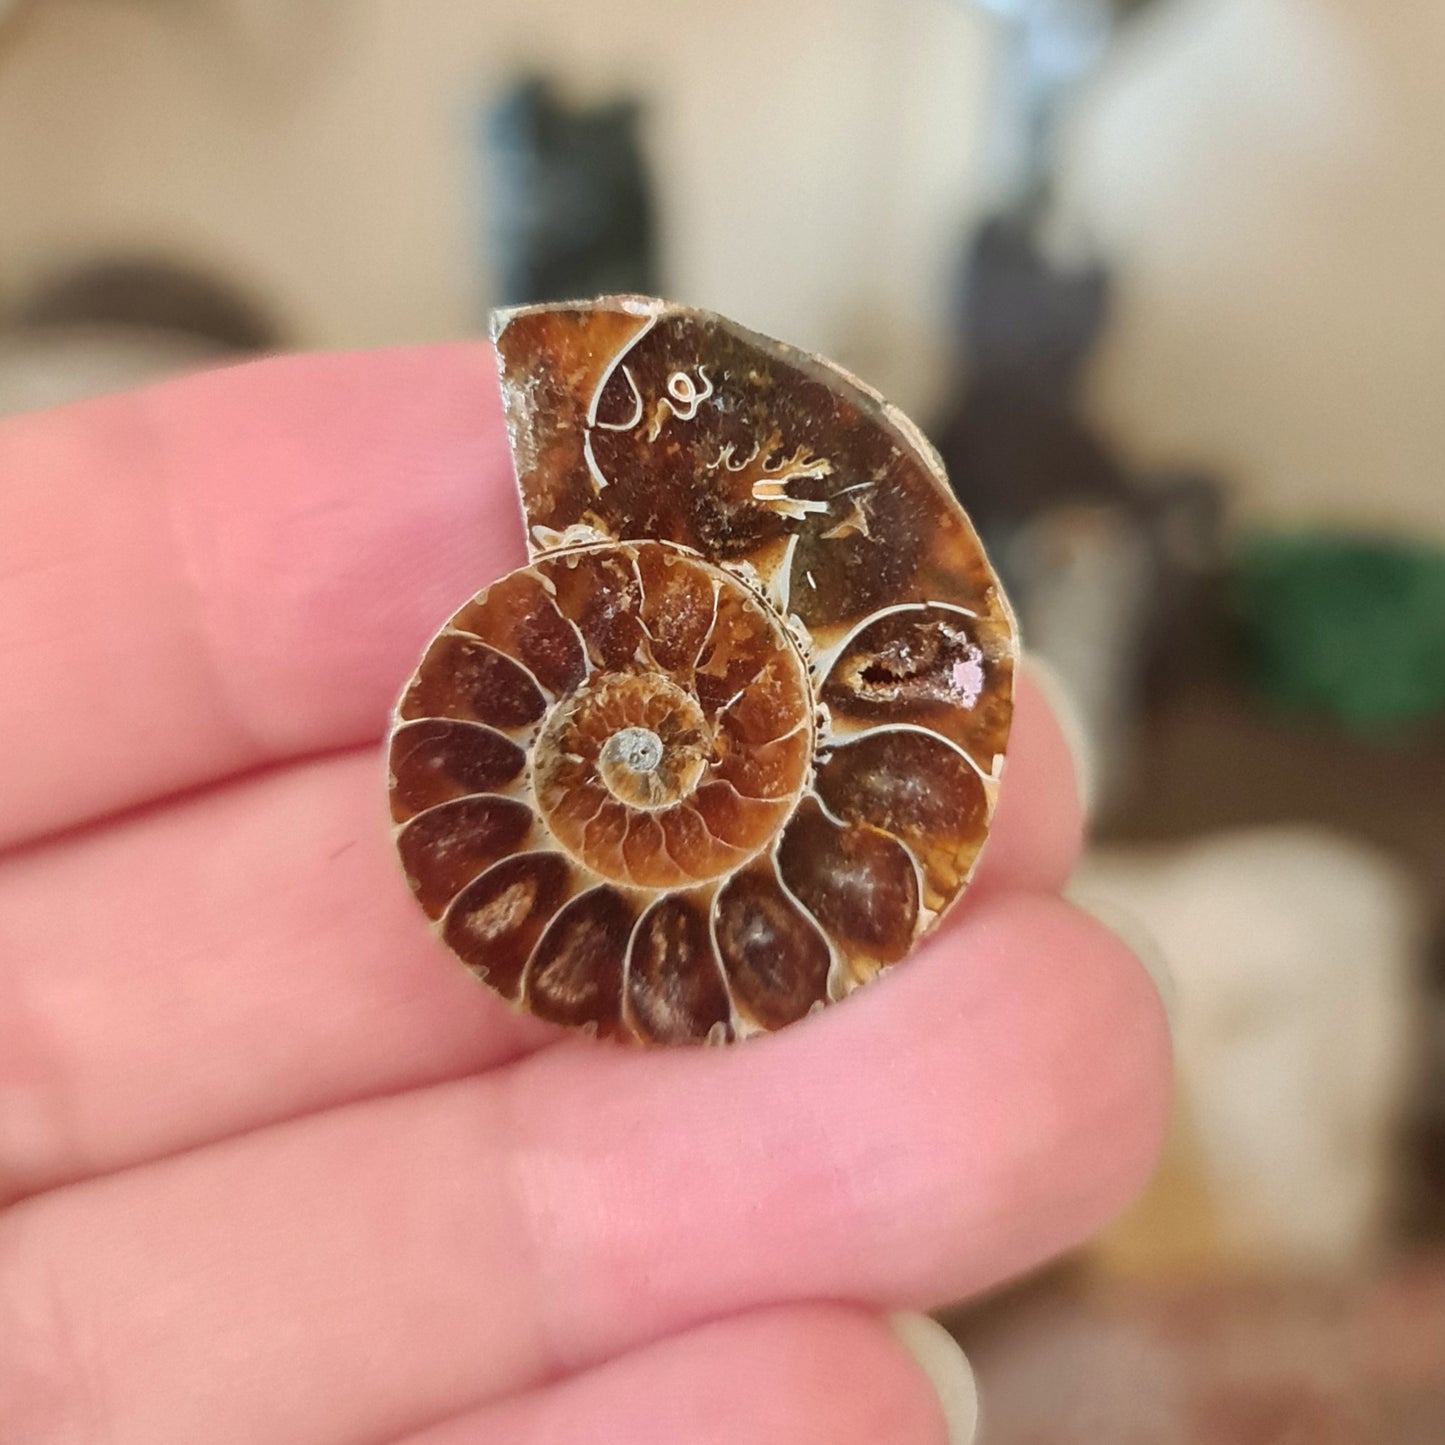 Ammonite Fossil - Mini